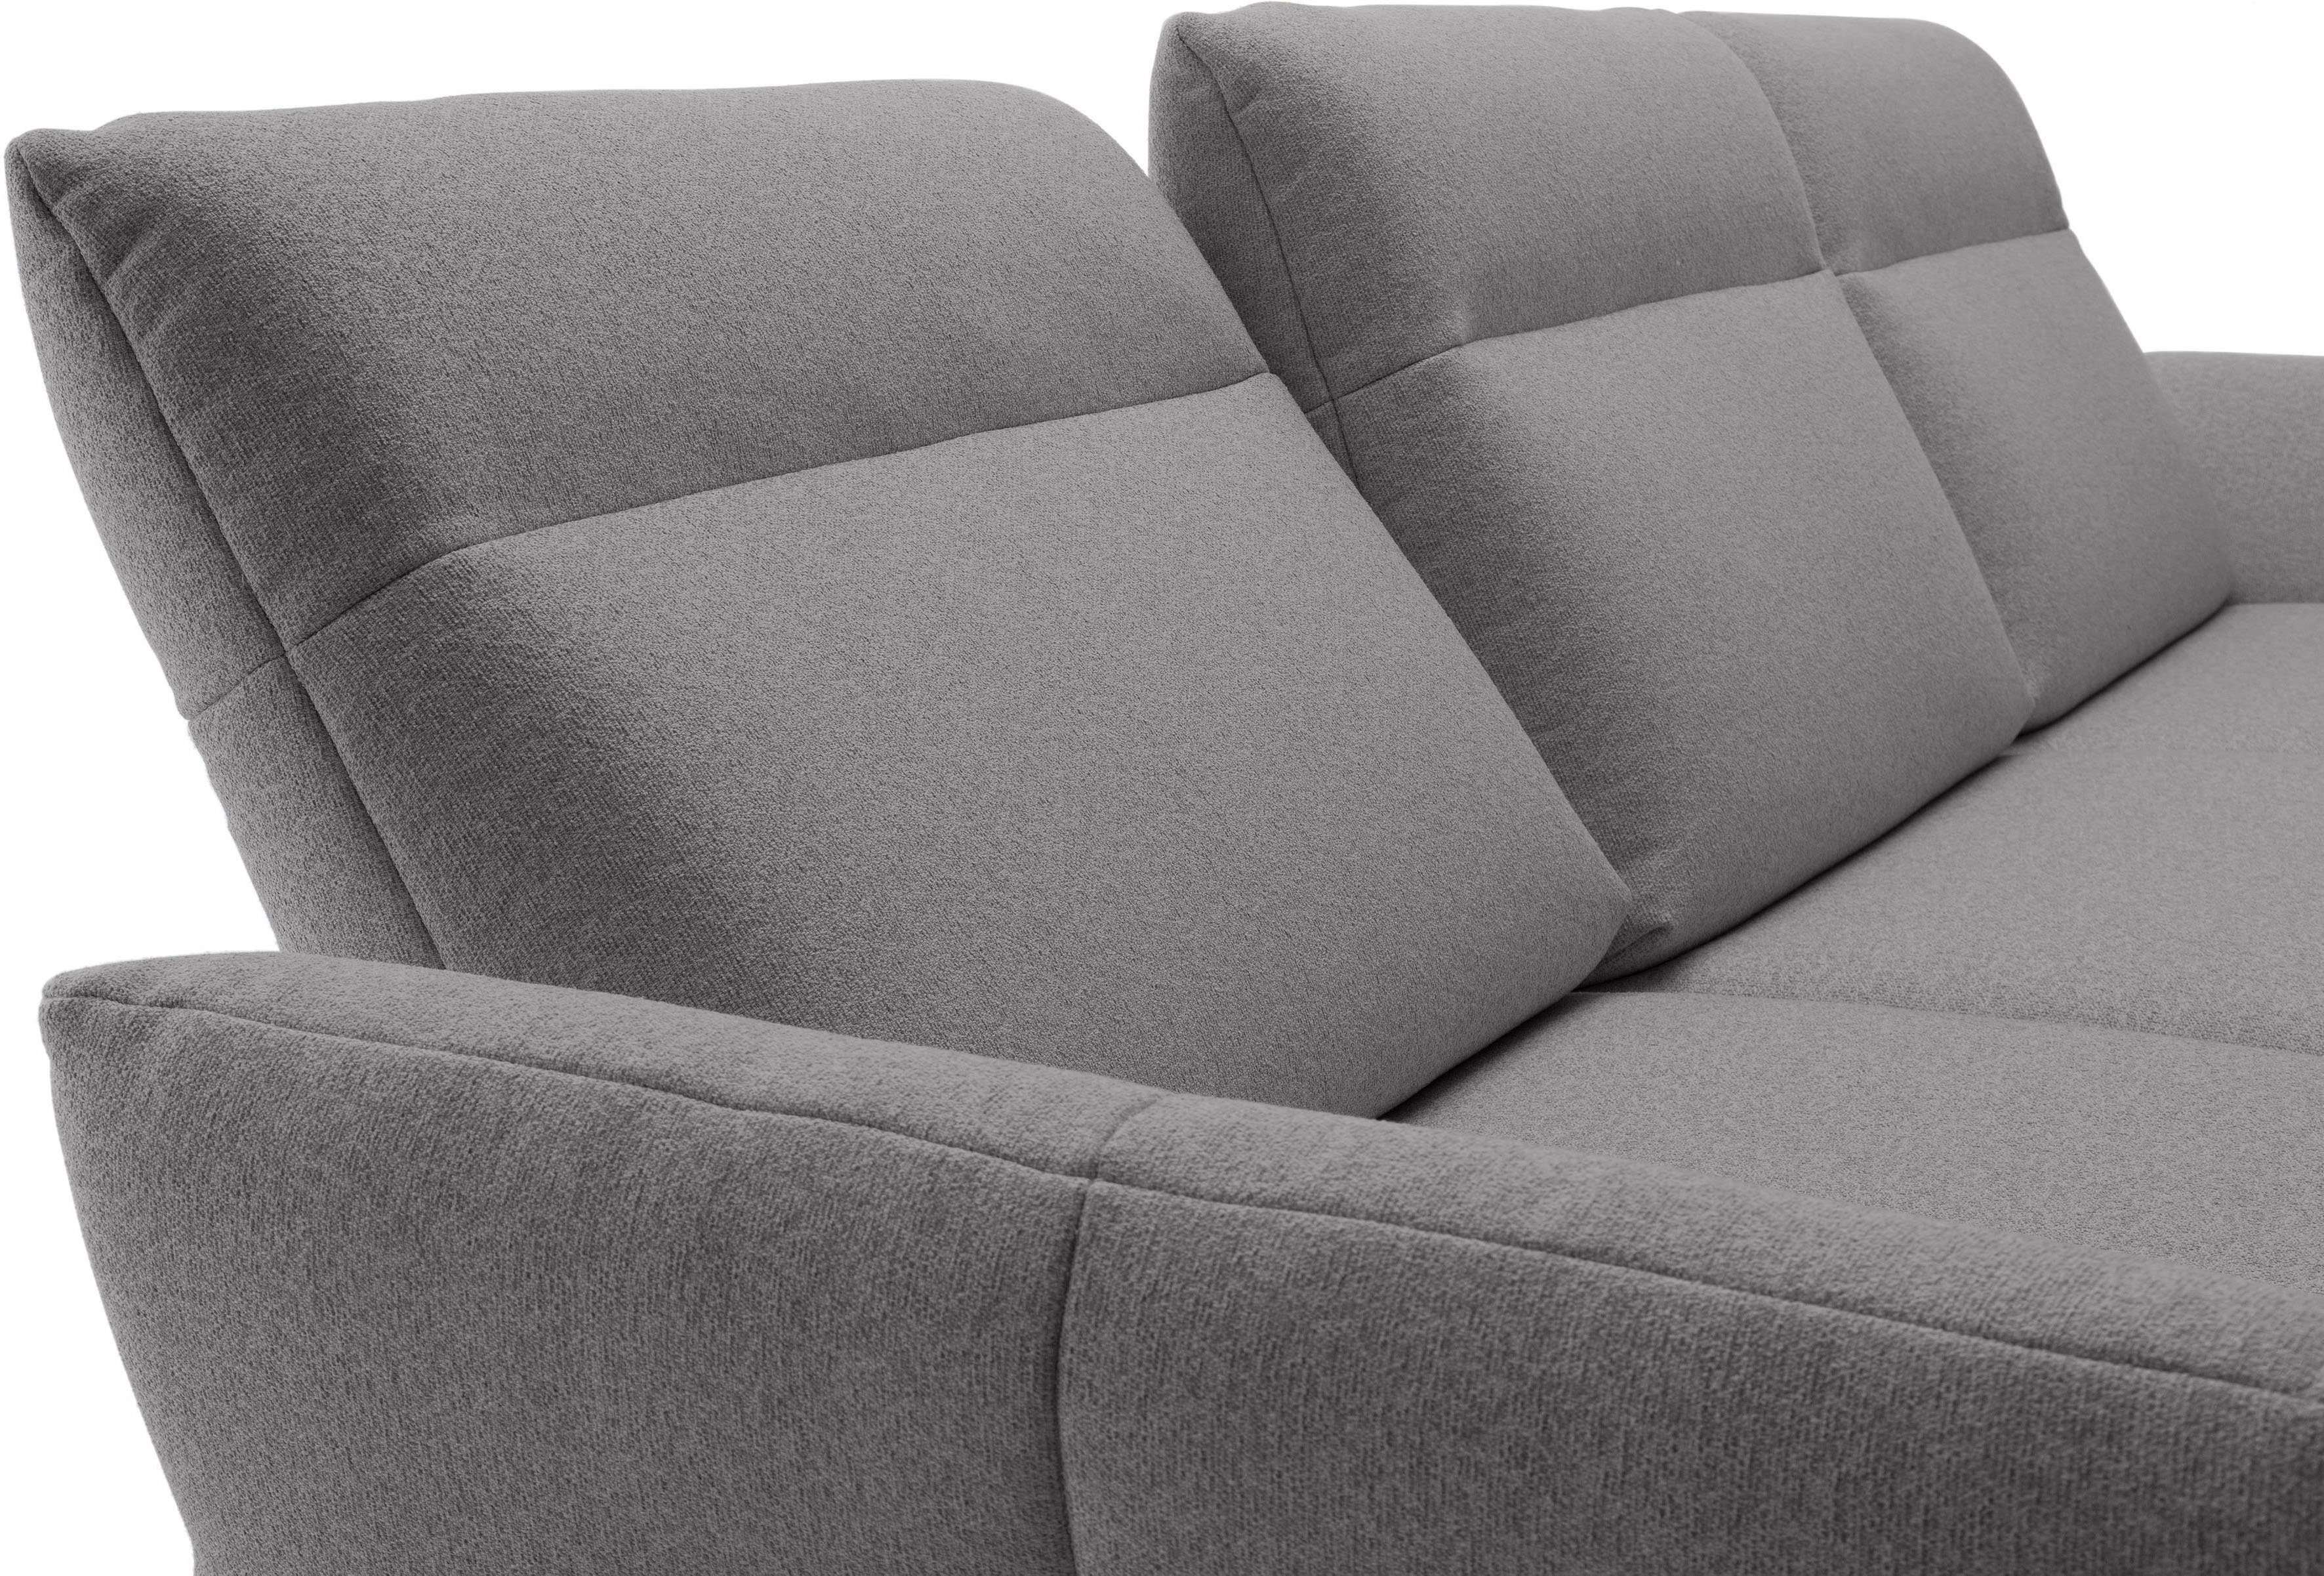 Sockel cm sofa Umbragrau, Winkelfüße Breite Eiche, 338 Ecksofa hs.460, hülsta in in